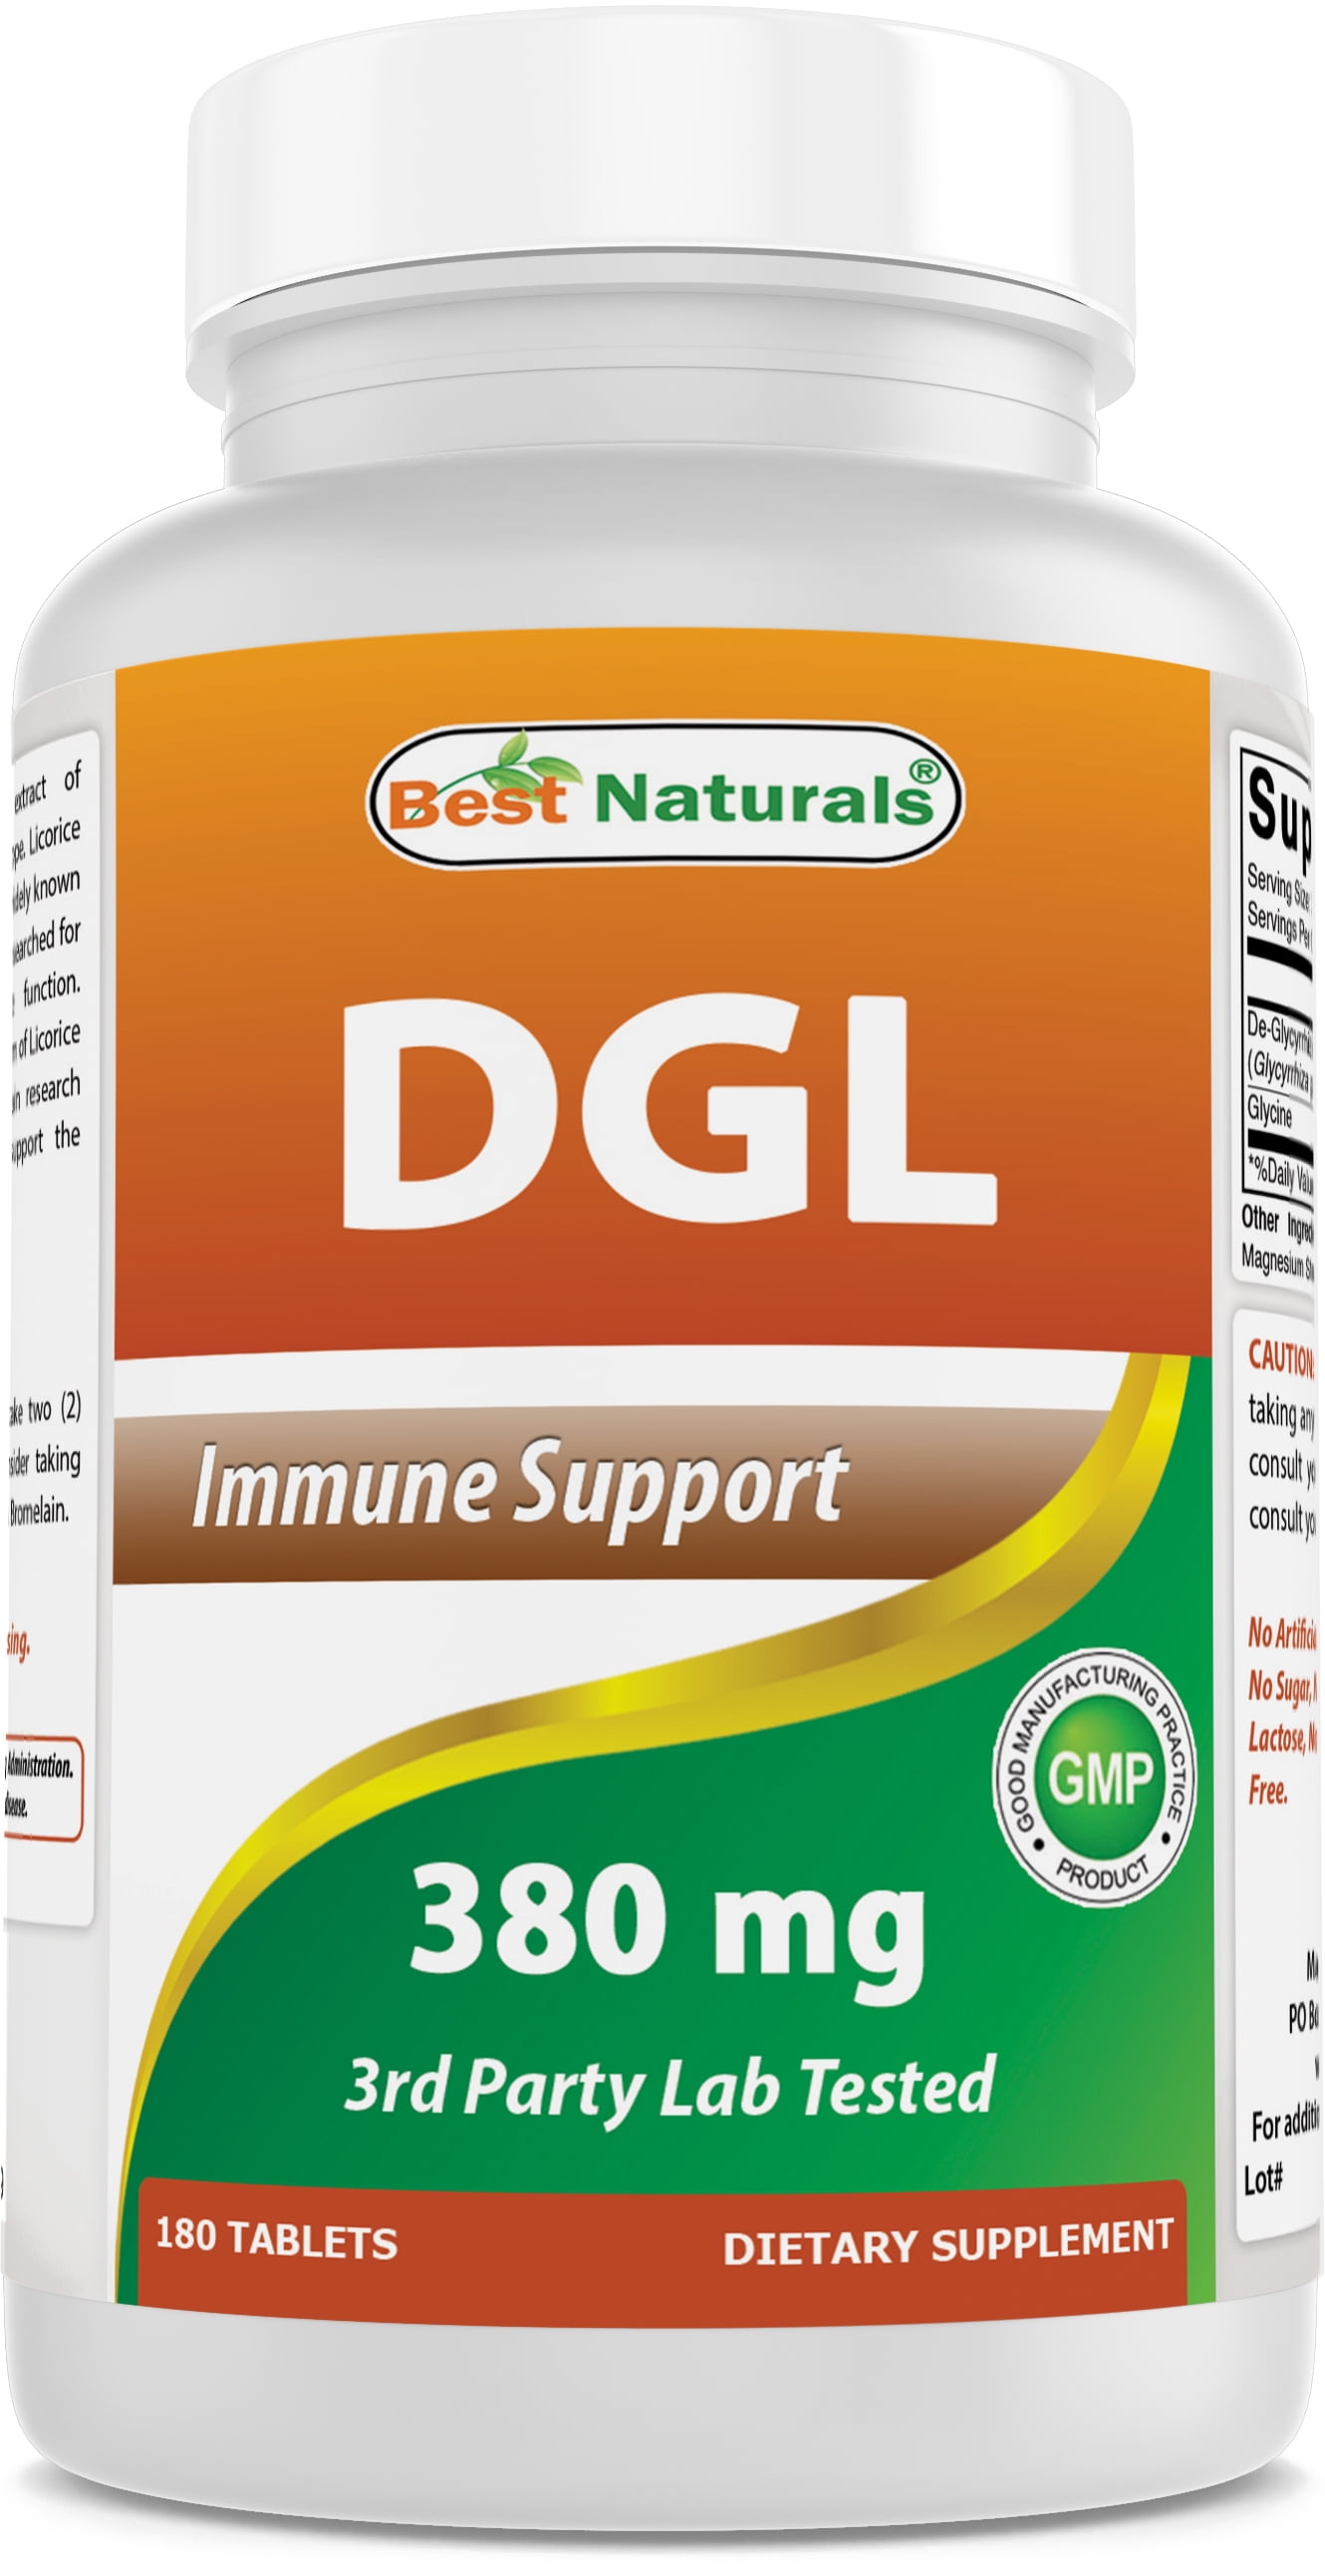 Mastic Gum/DGL (60 Chewable Tablets) – Green Wisdom Health